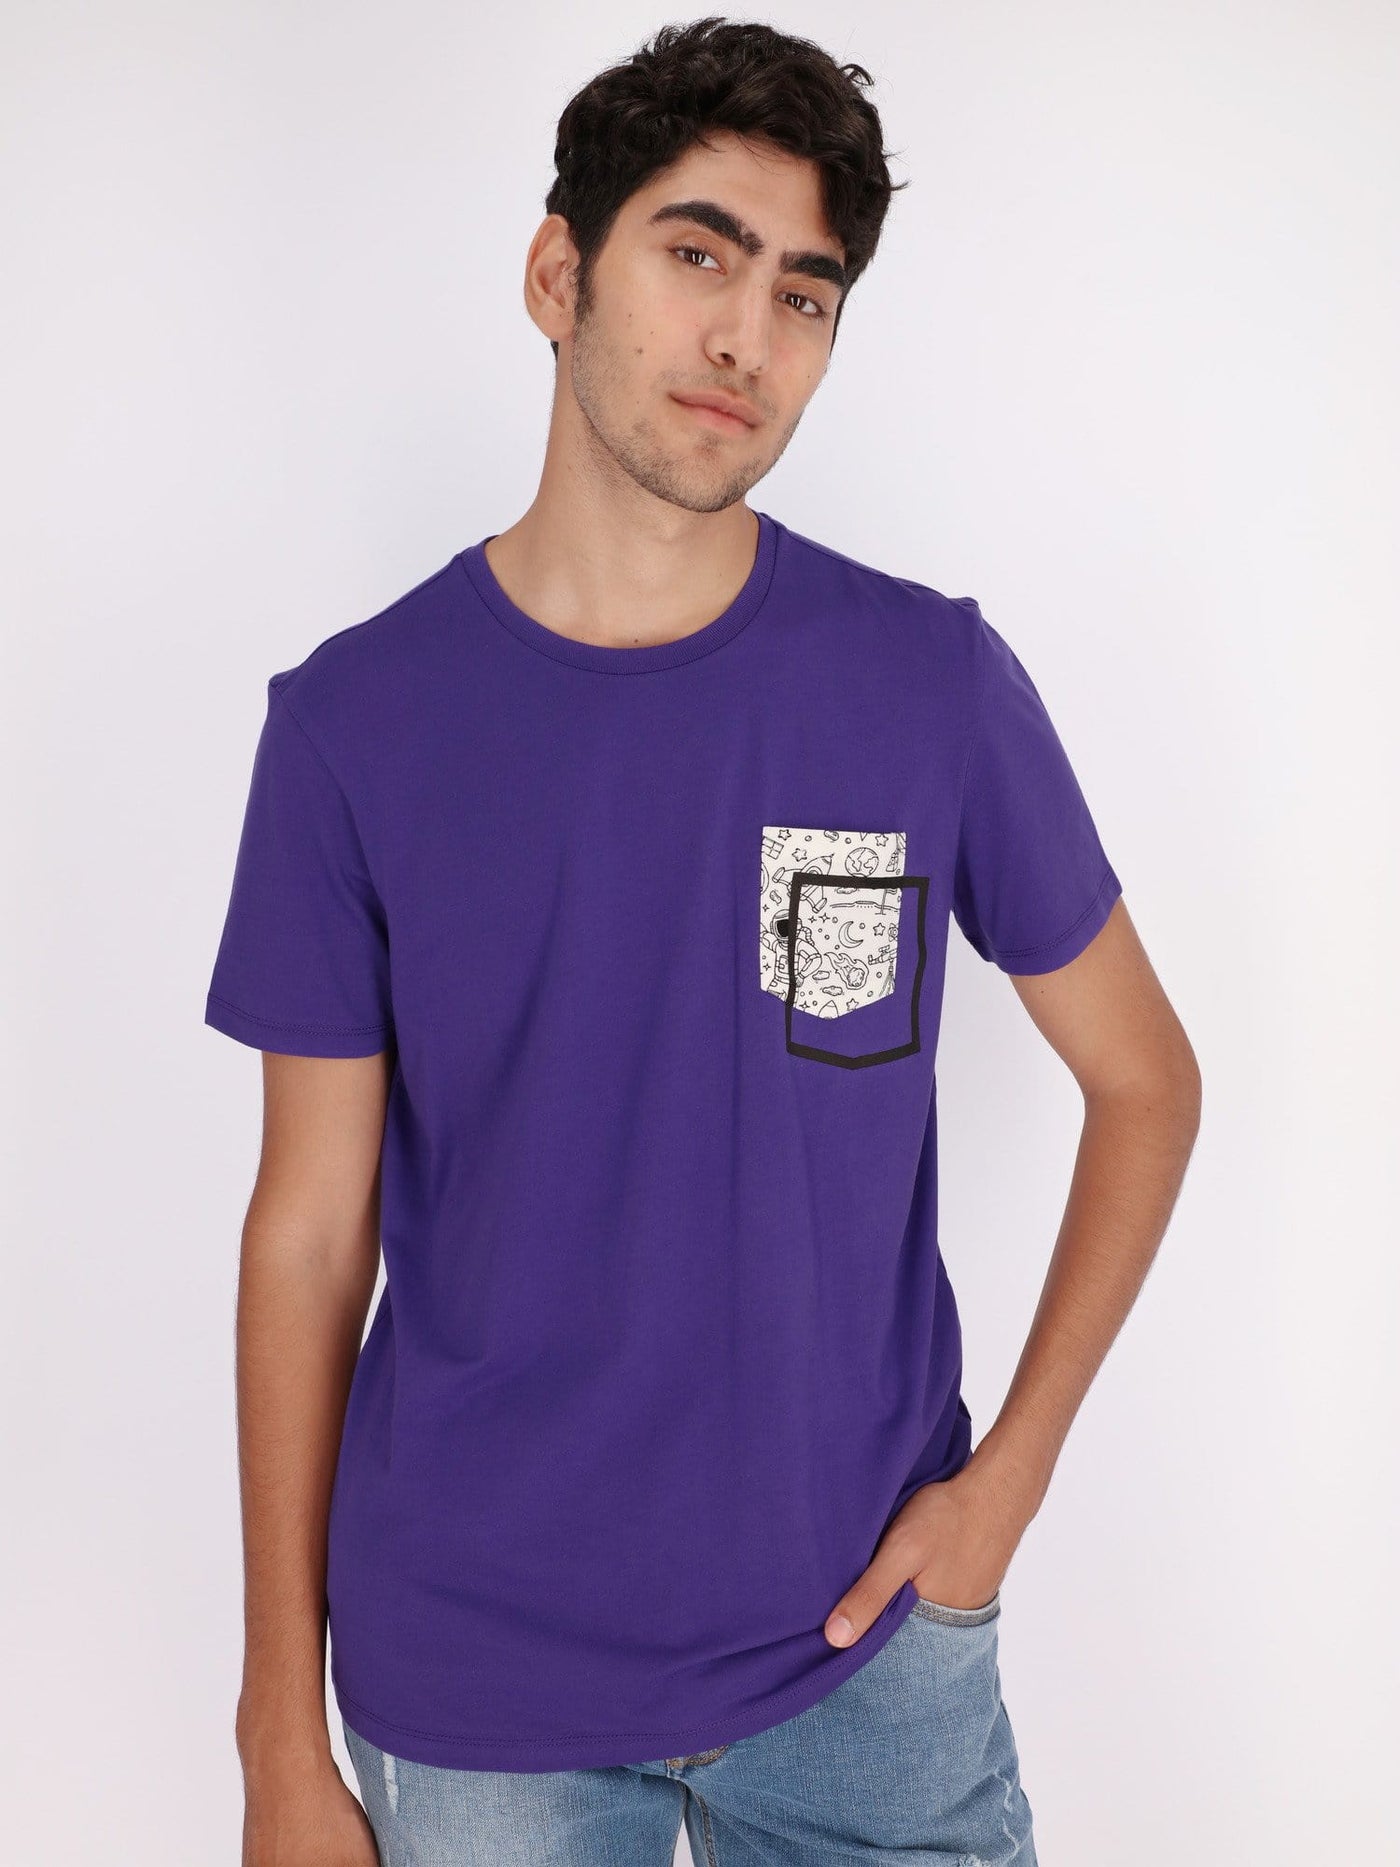 OR T-Shirts Short Sleeves T-shirt with Illusion Printed Pocket